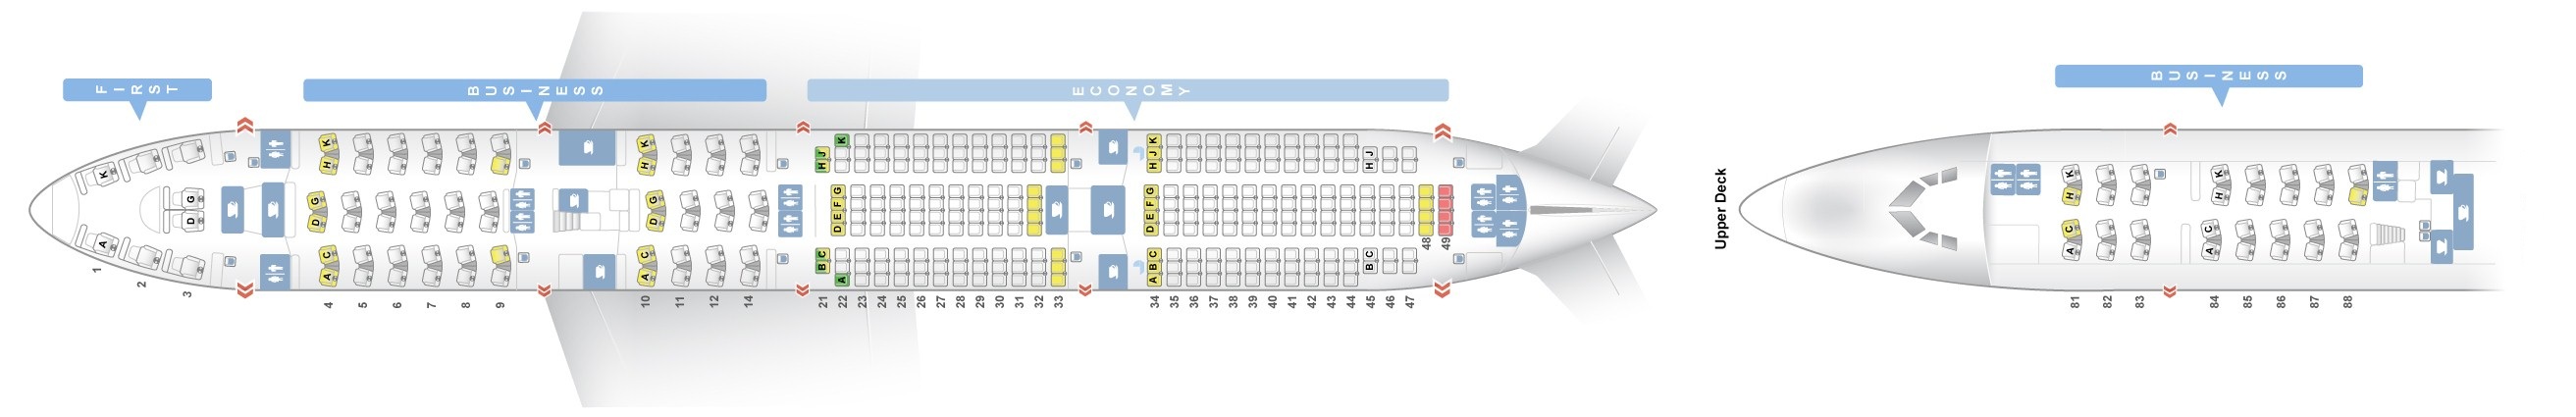 Lufthansa 474 Seating Chart